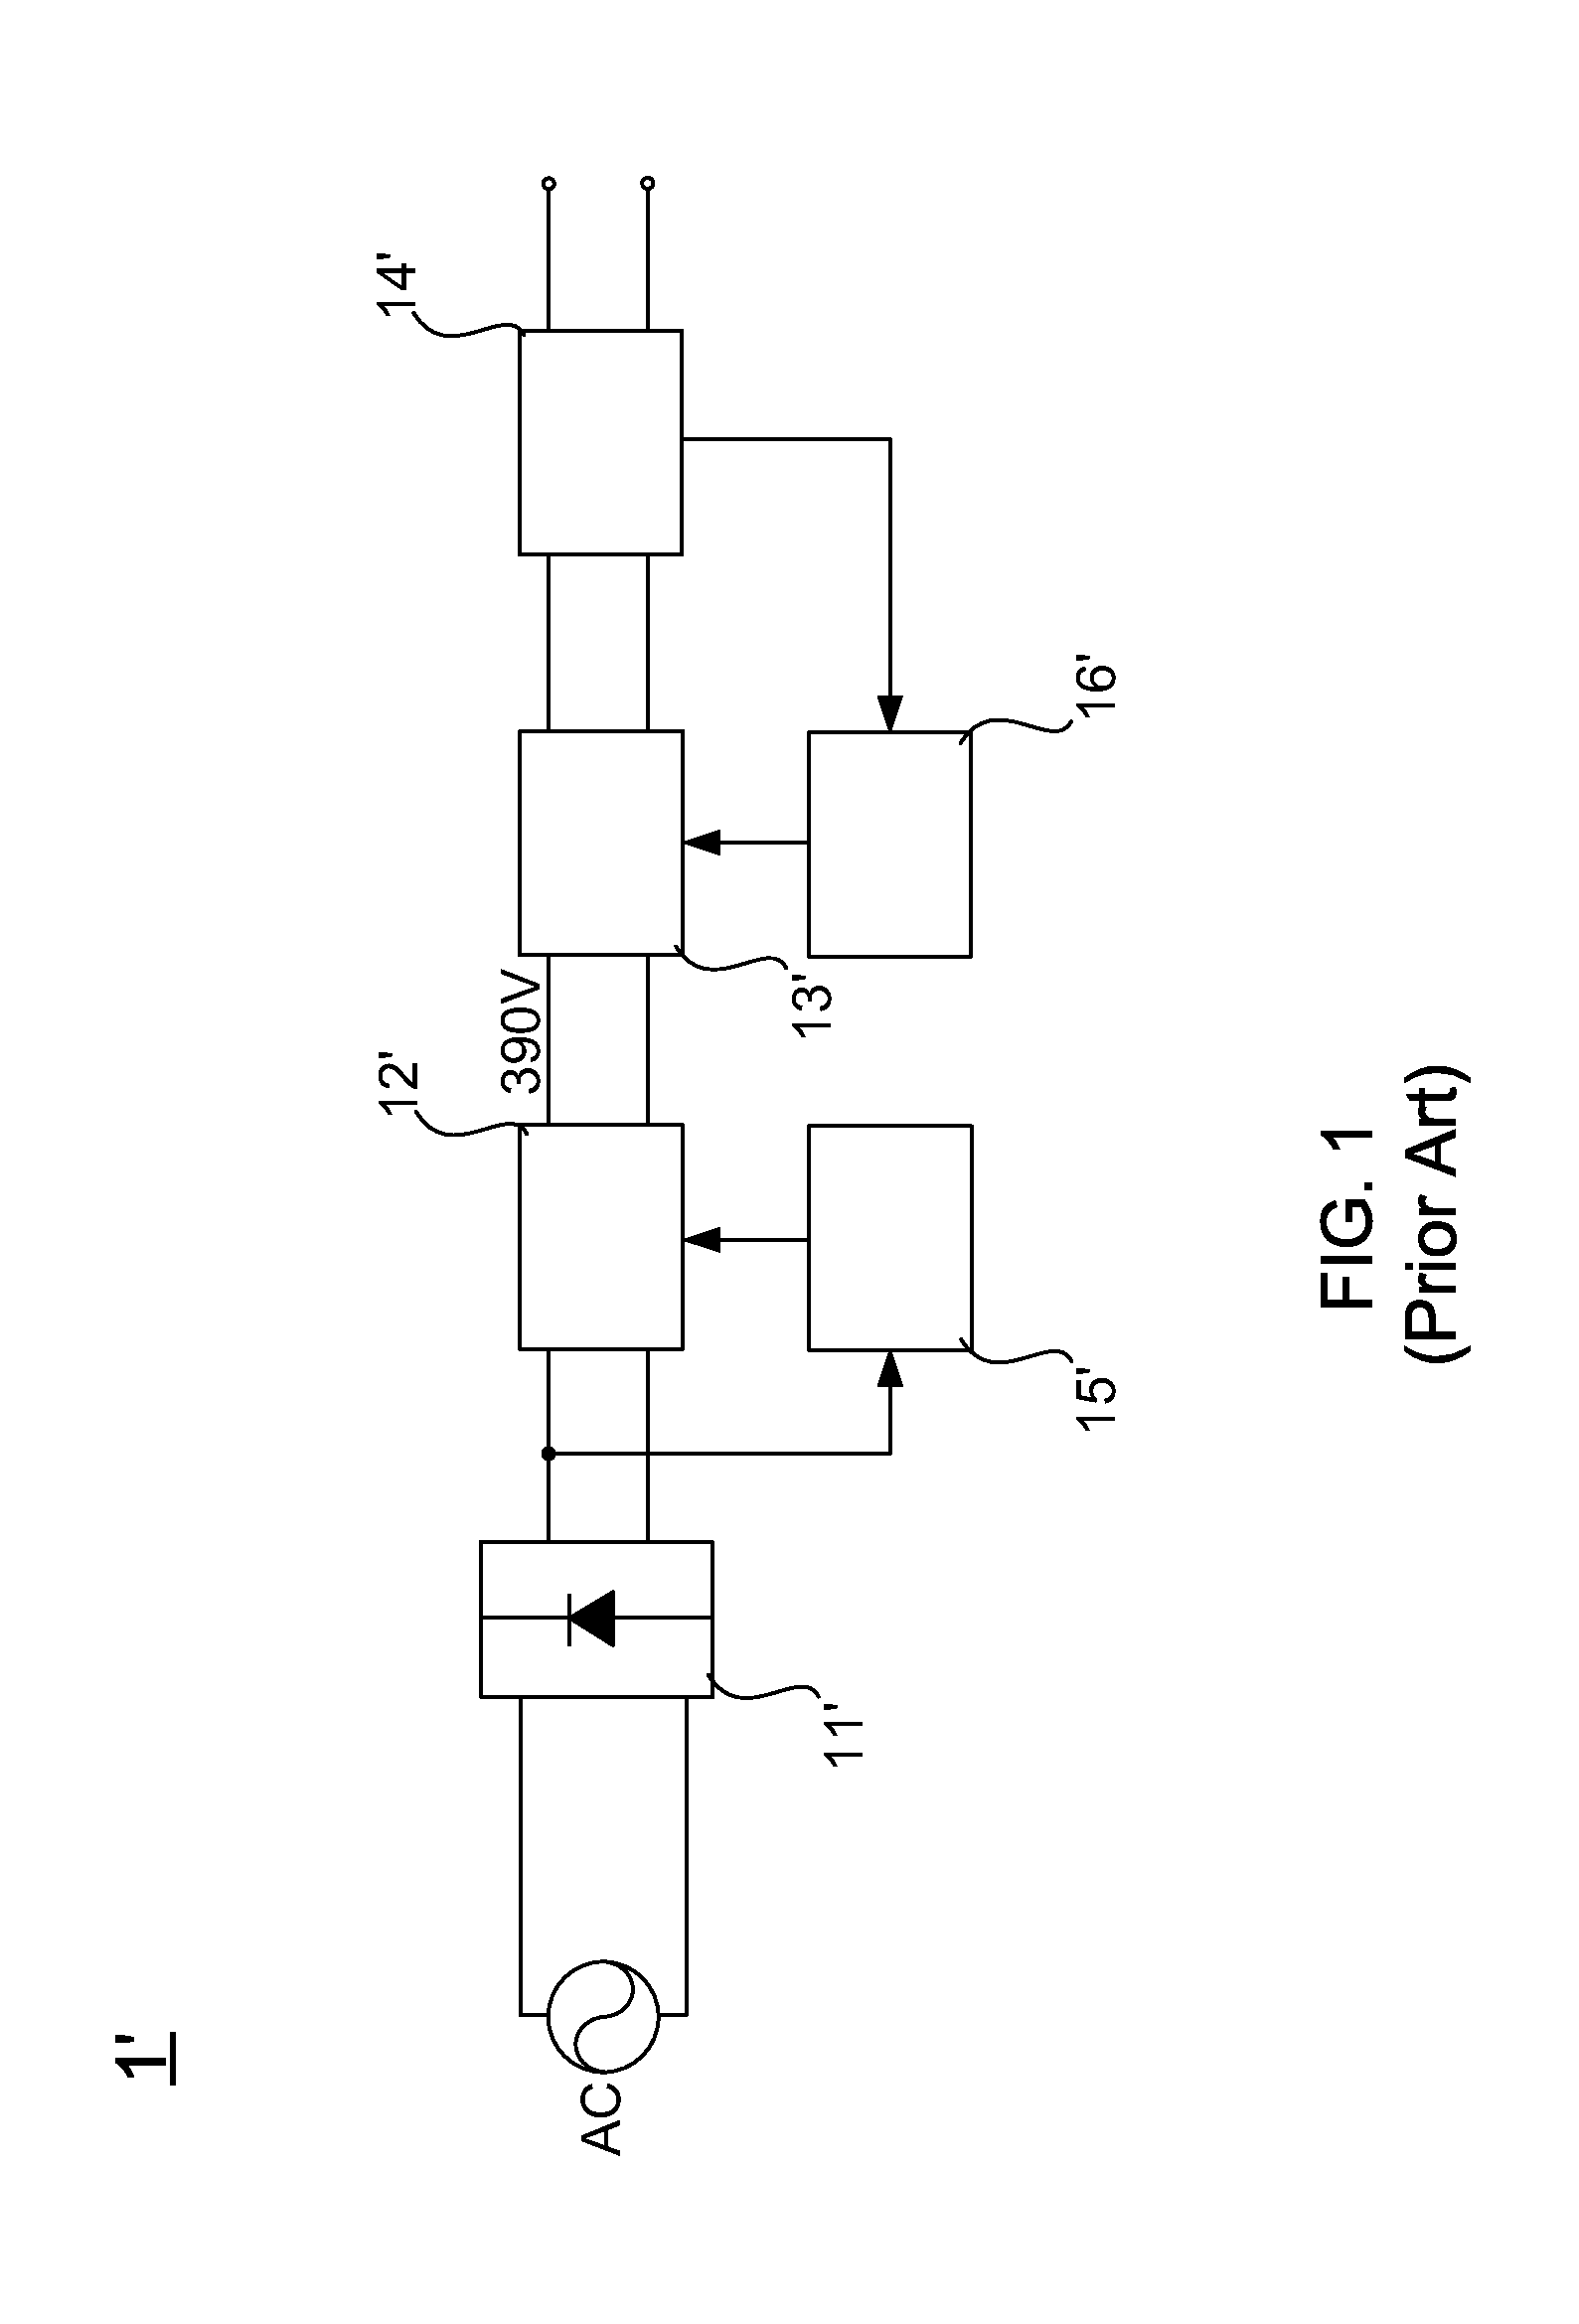 Double-output half-bridge LLC serial resonant converter